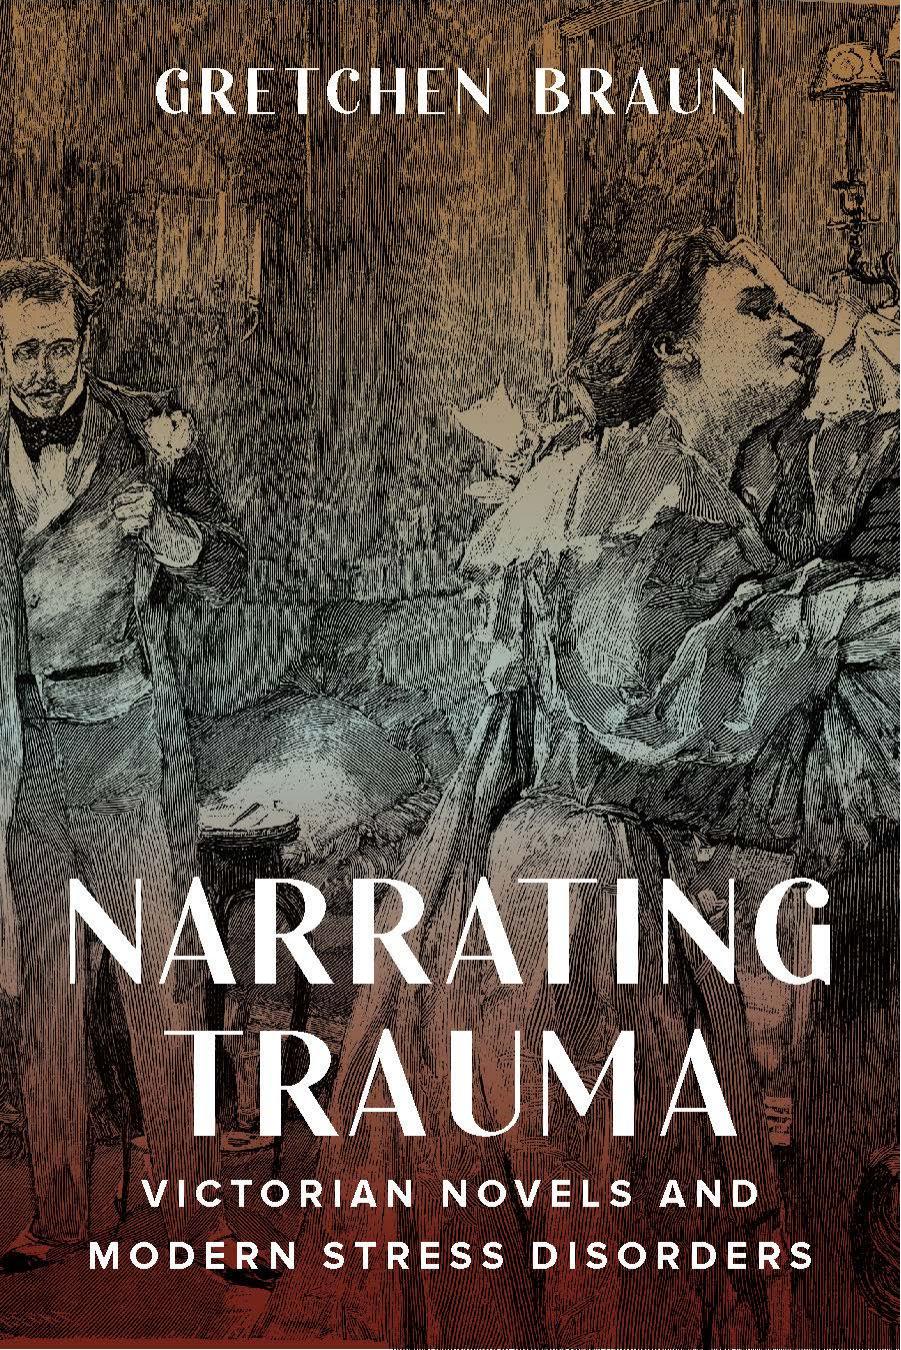 Narrating Trauma: Victorian Novels and Modern Stress Disorders by Gretchen Braun